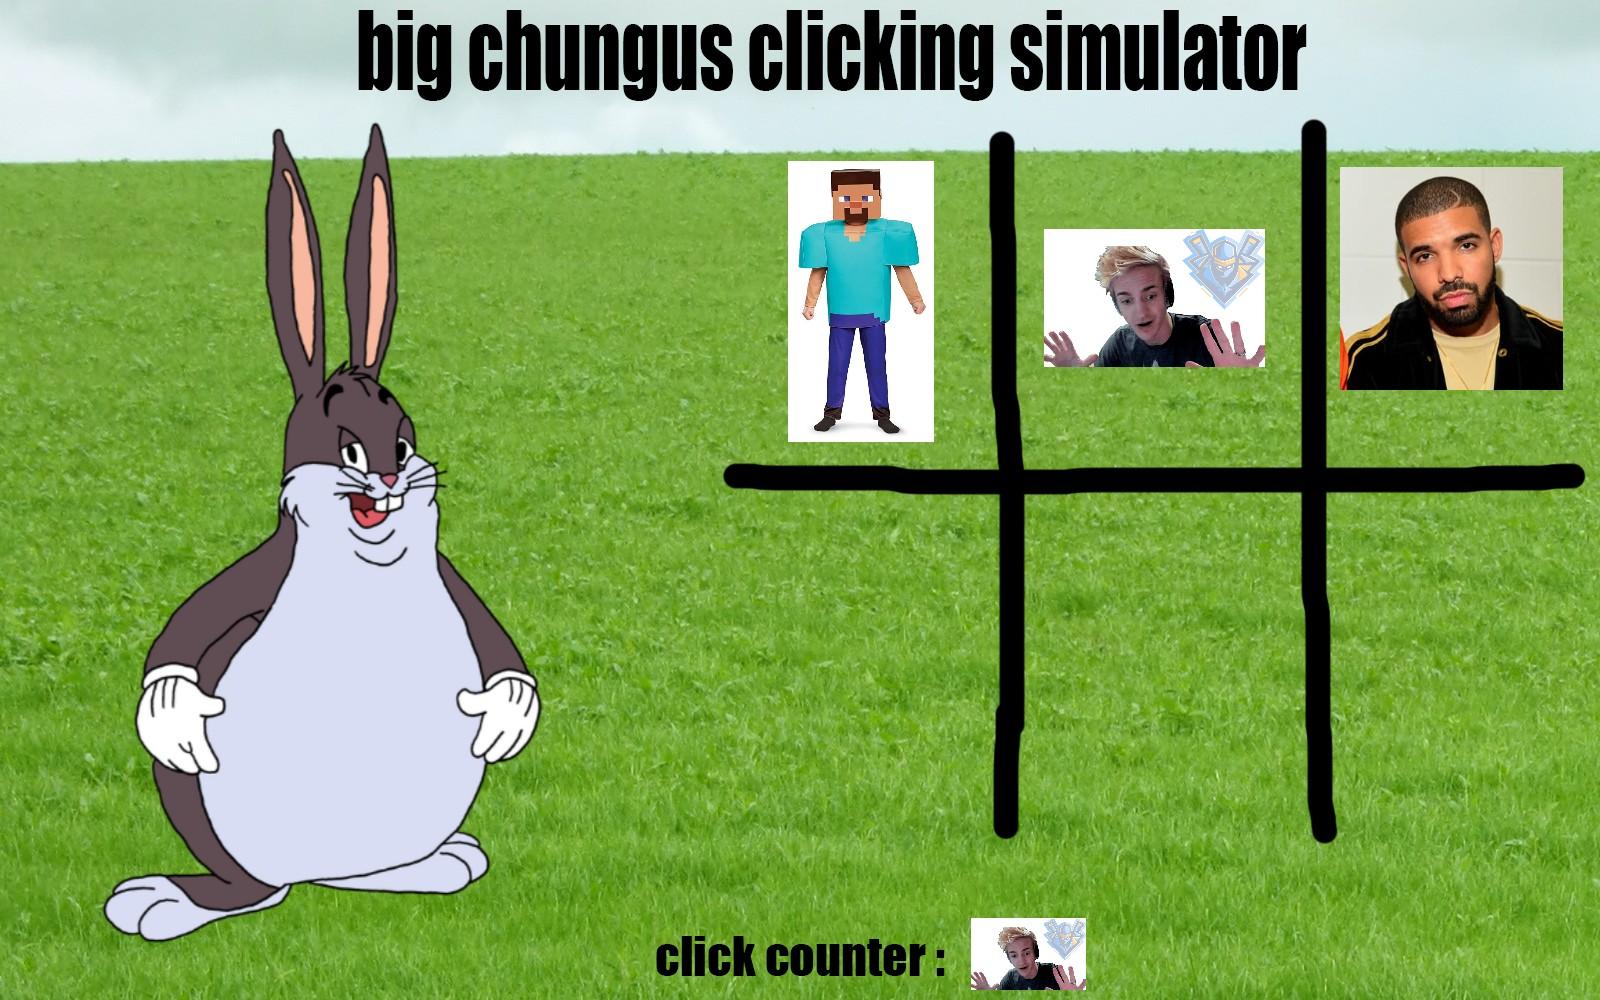 Big chungus clicking simulator